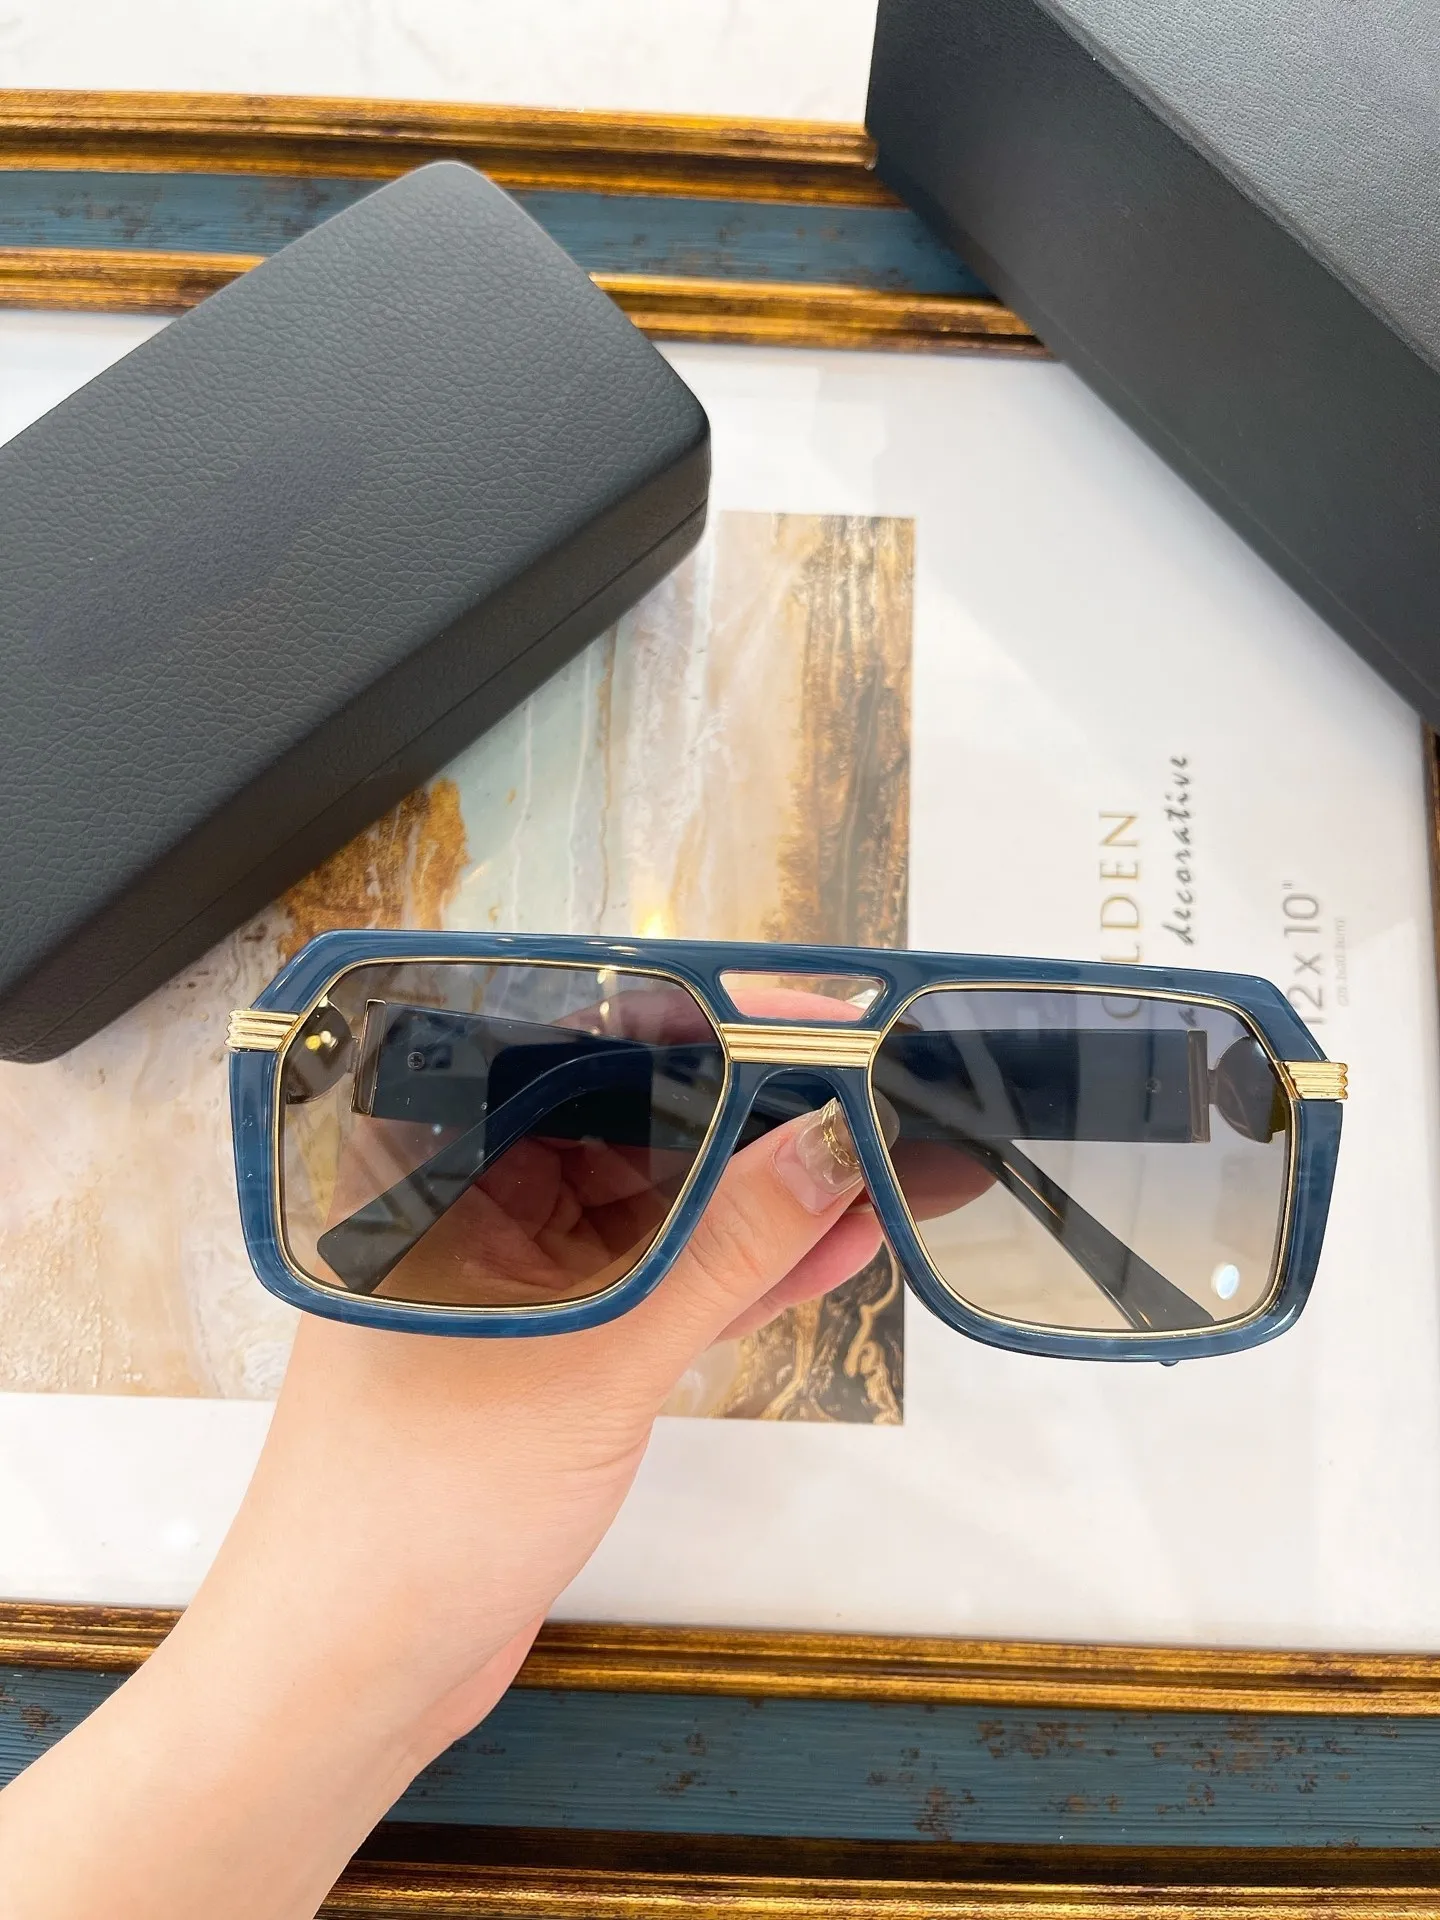 2022 New V Home Plate Fashion Солнцезащитные очки мужчины и женщины с тем же двойным лучевым солнцезащитным кремом для солнцезащитных средств.